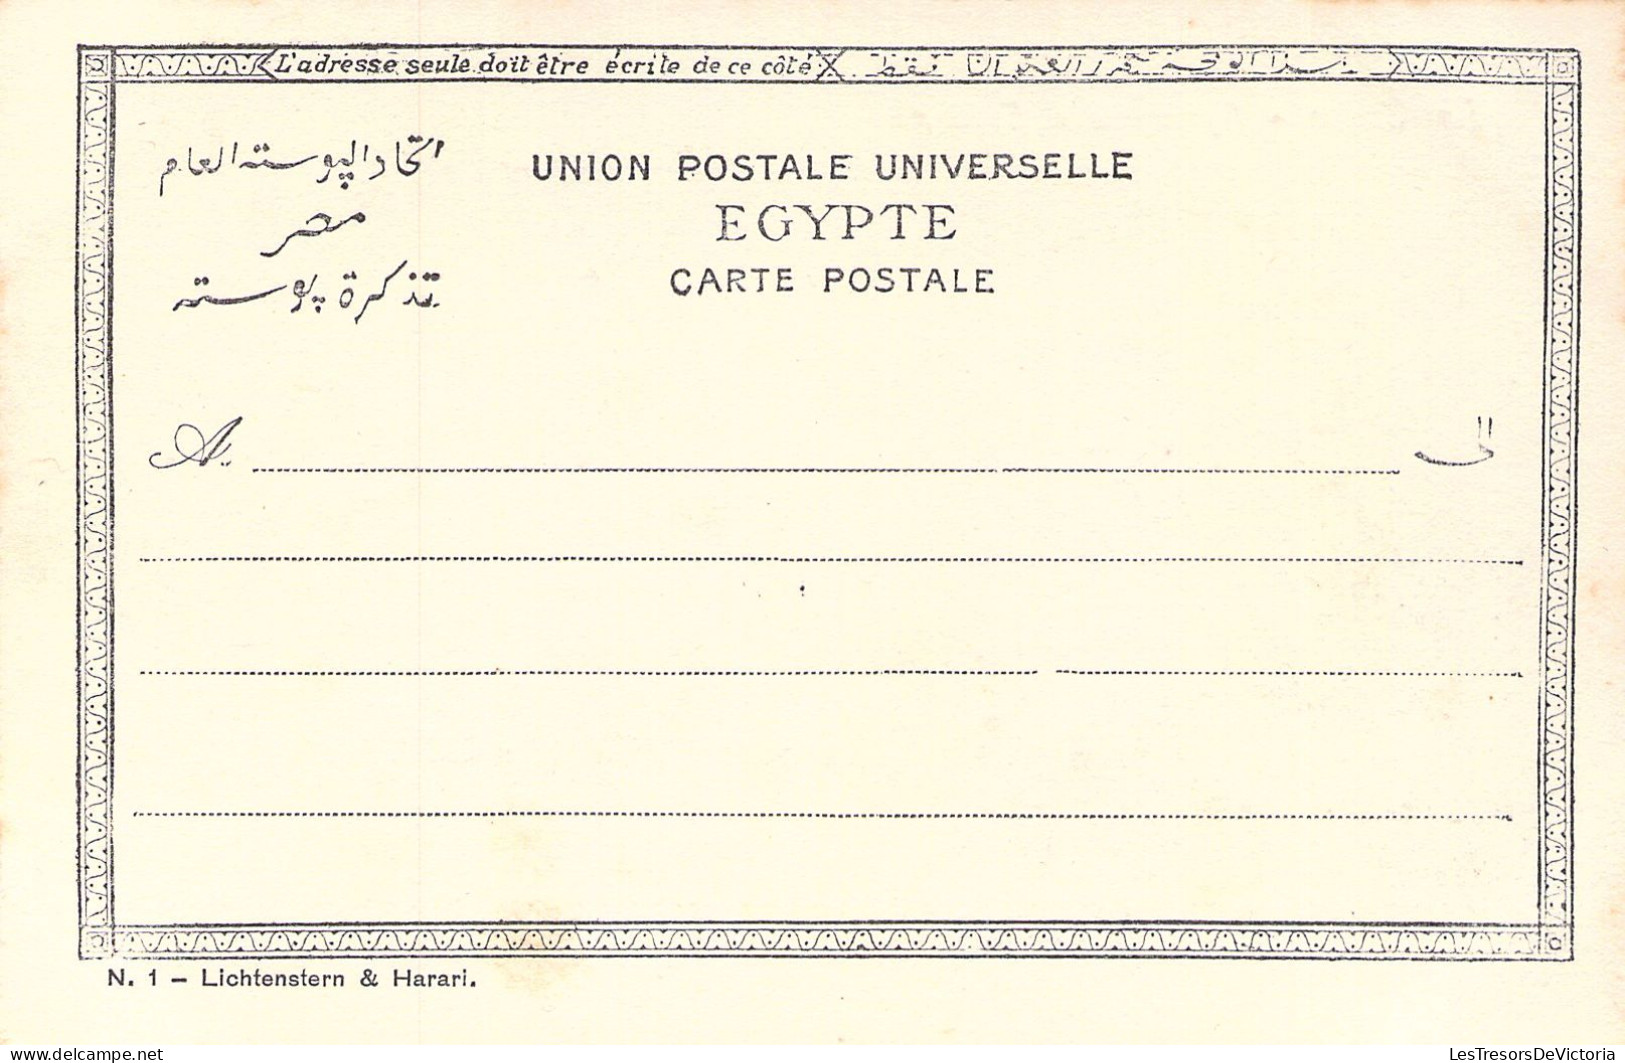 EGYPTE - Pyramide Et Sphinx - Carte Postale Ancienne - Kairo